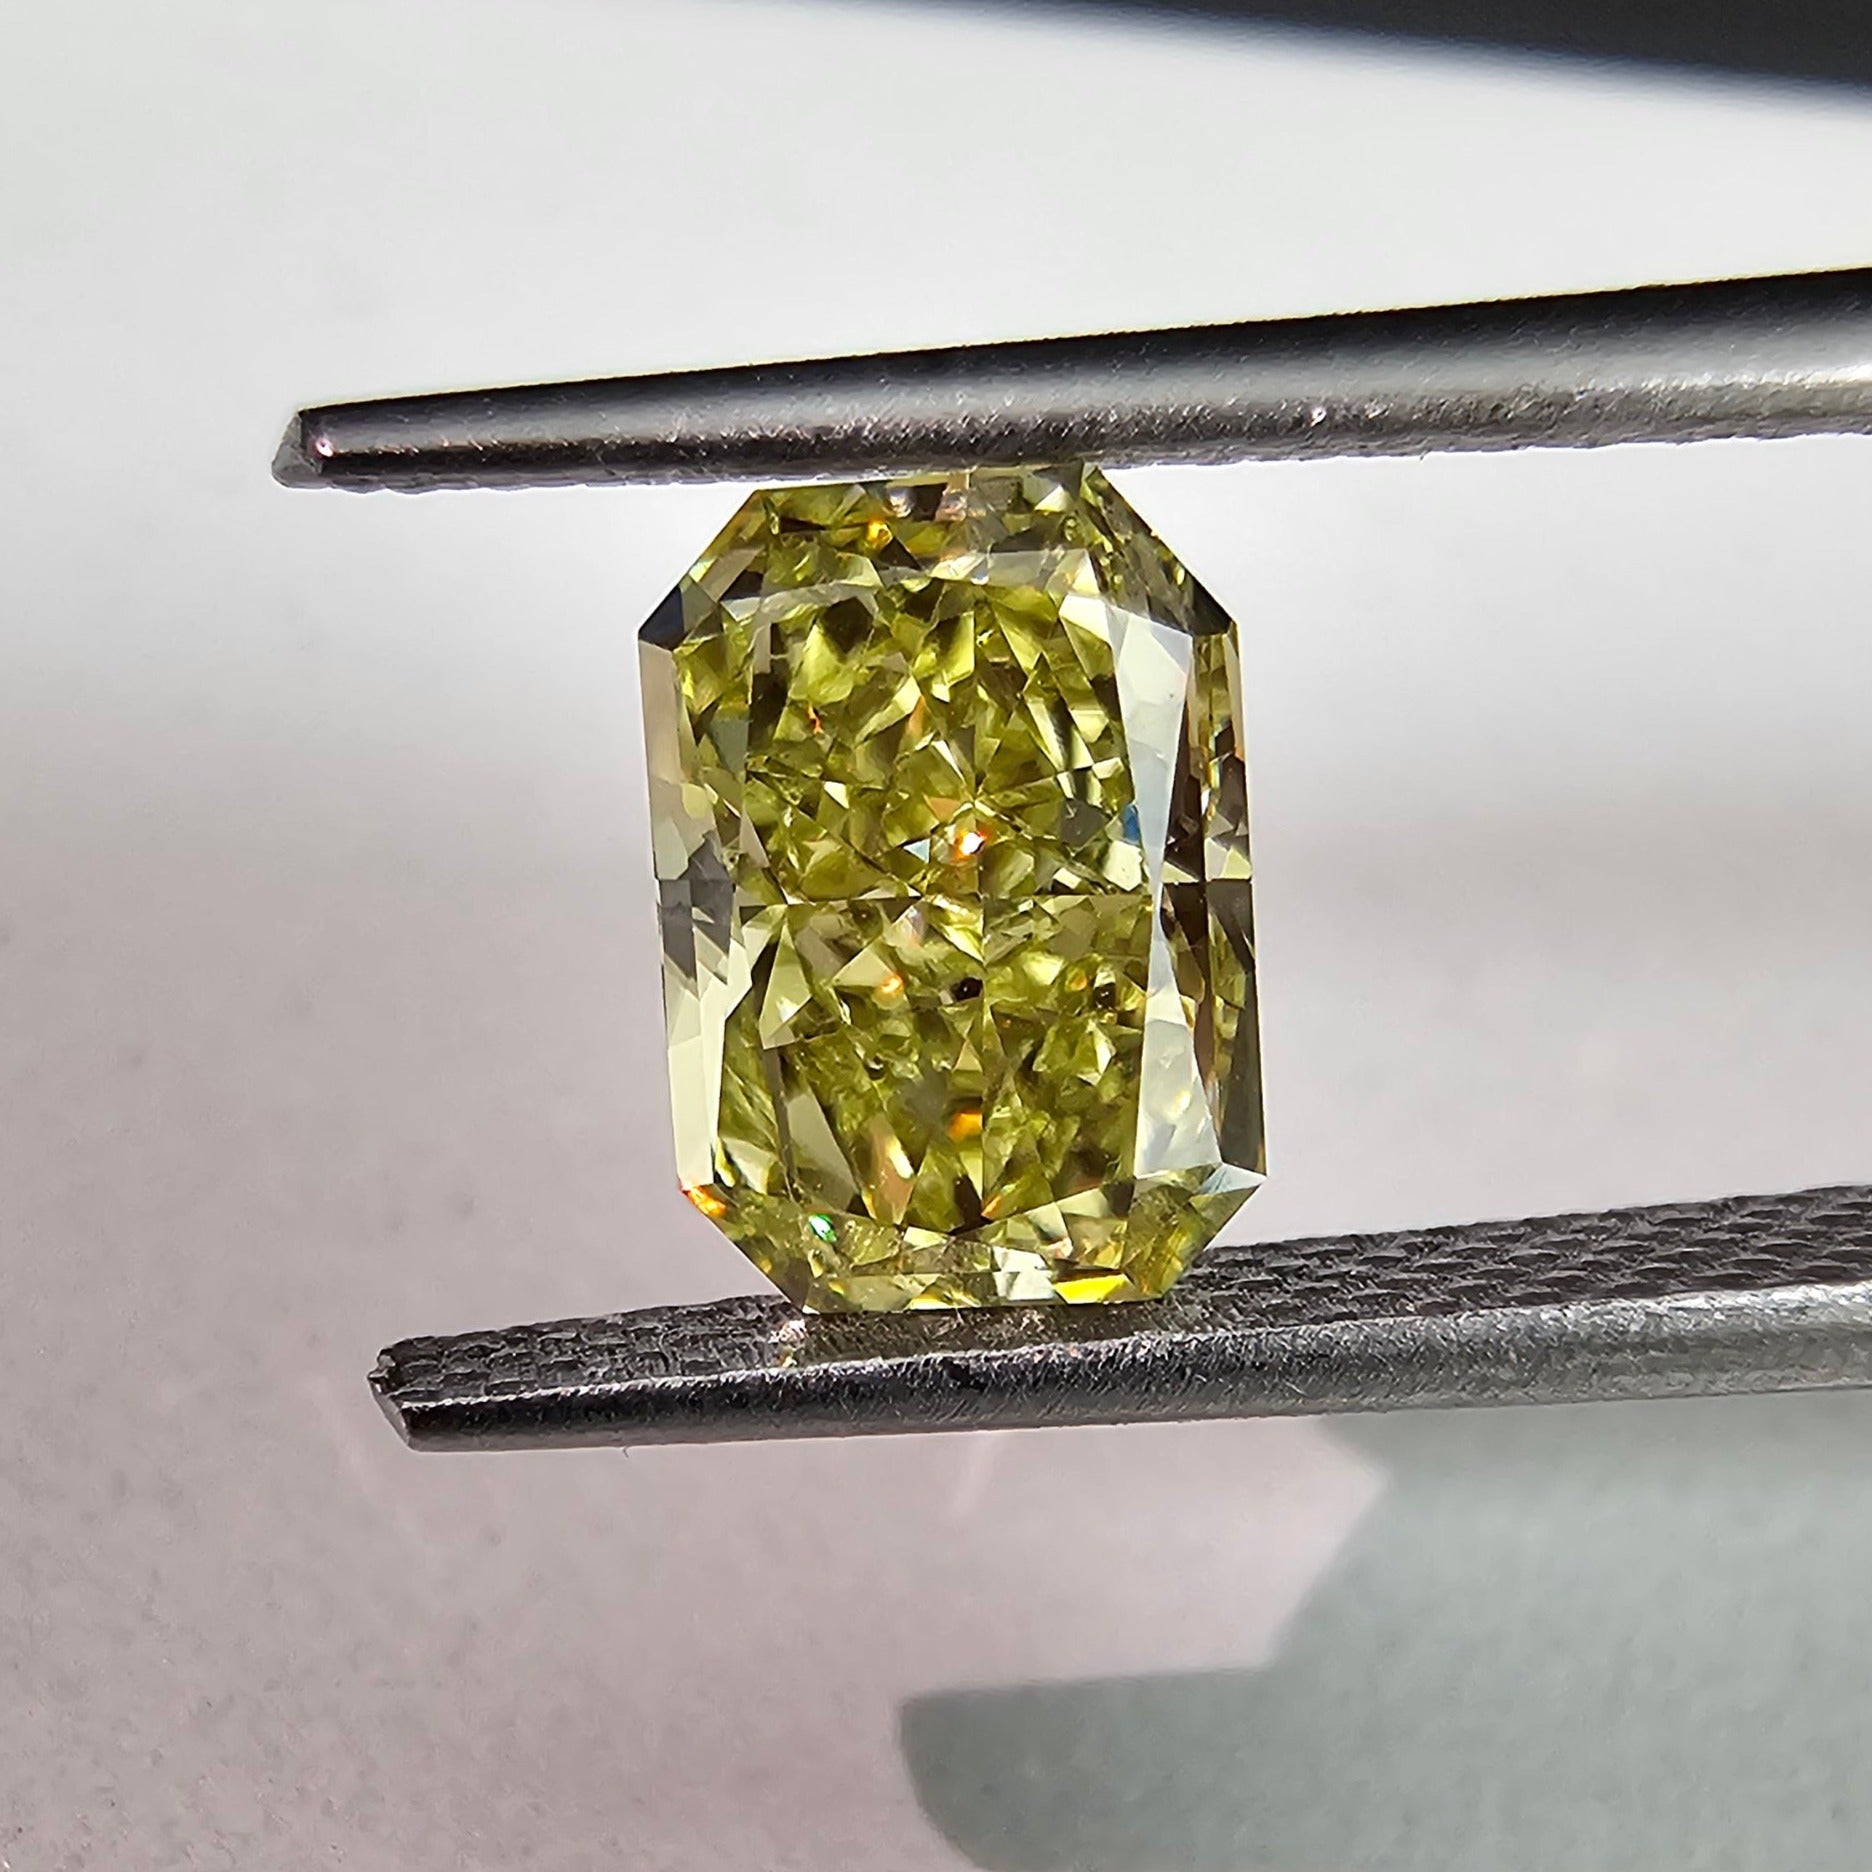 1.12 Carat Elongated Radiant Cut GIA Certified Diamond  Fancy Intense Yellow  VS2 Clarity 